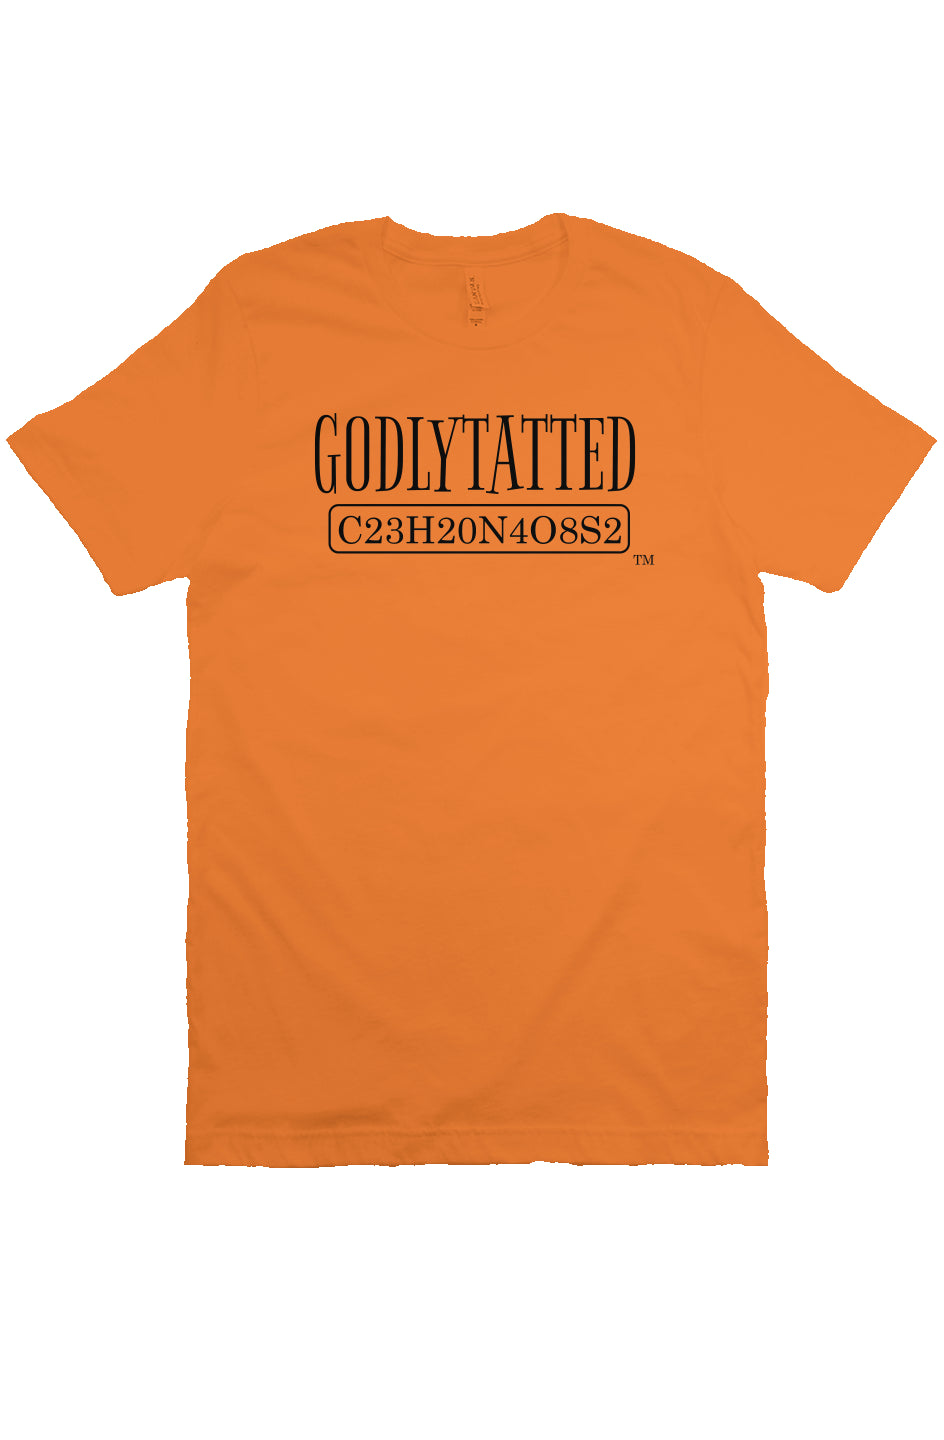 godlytatted - adult - orange - Black logo